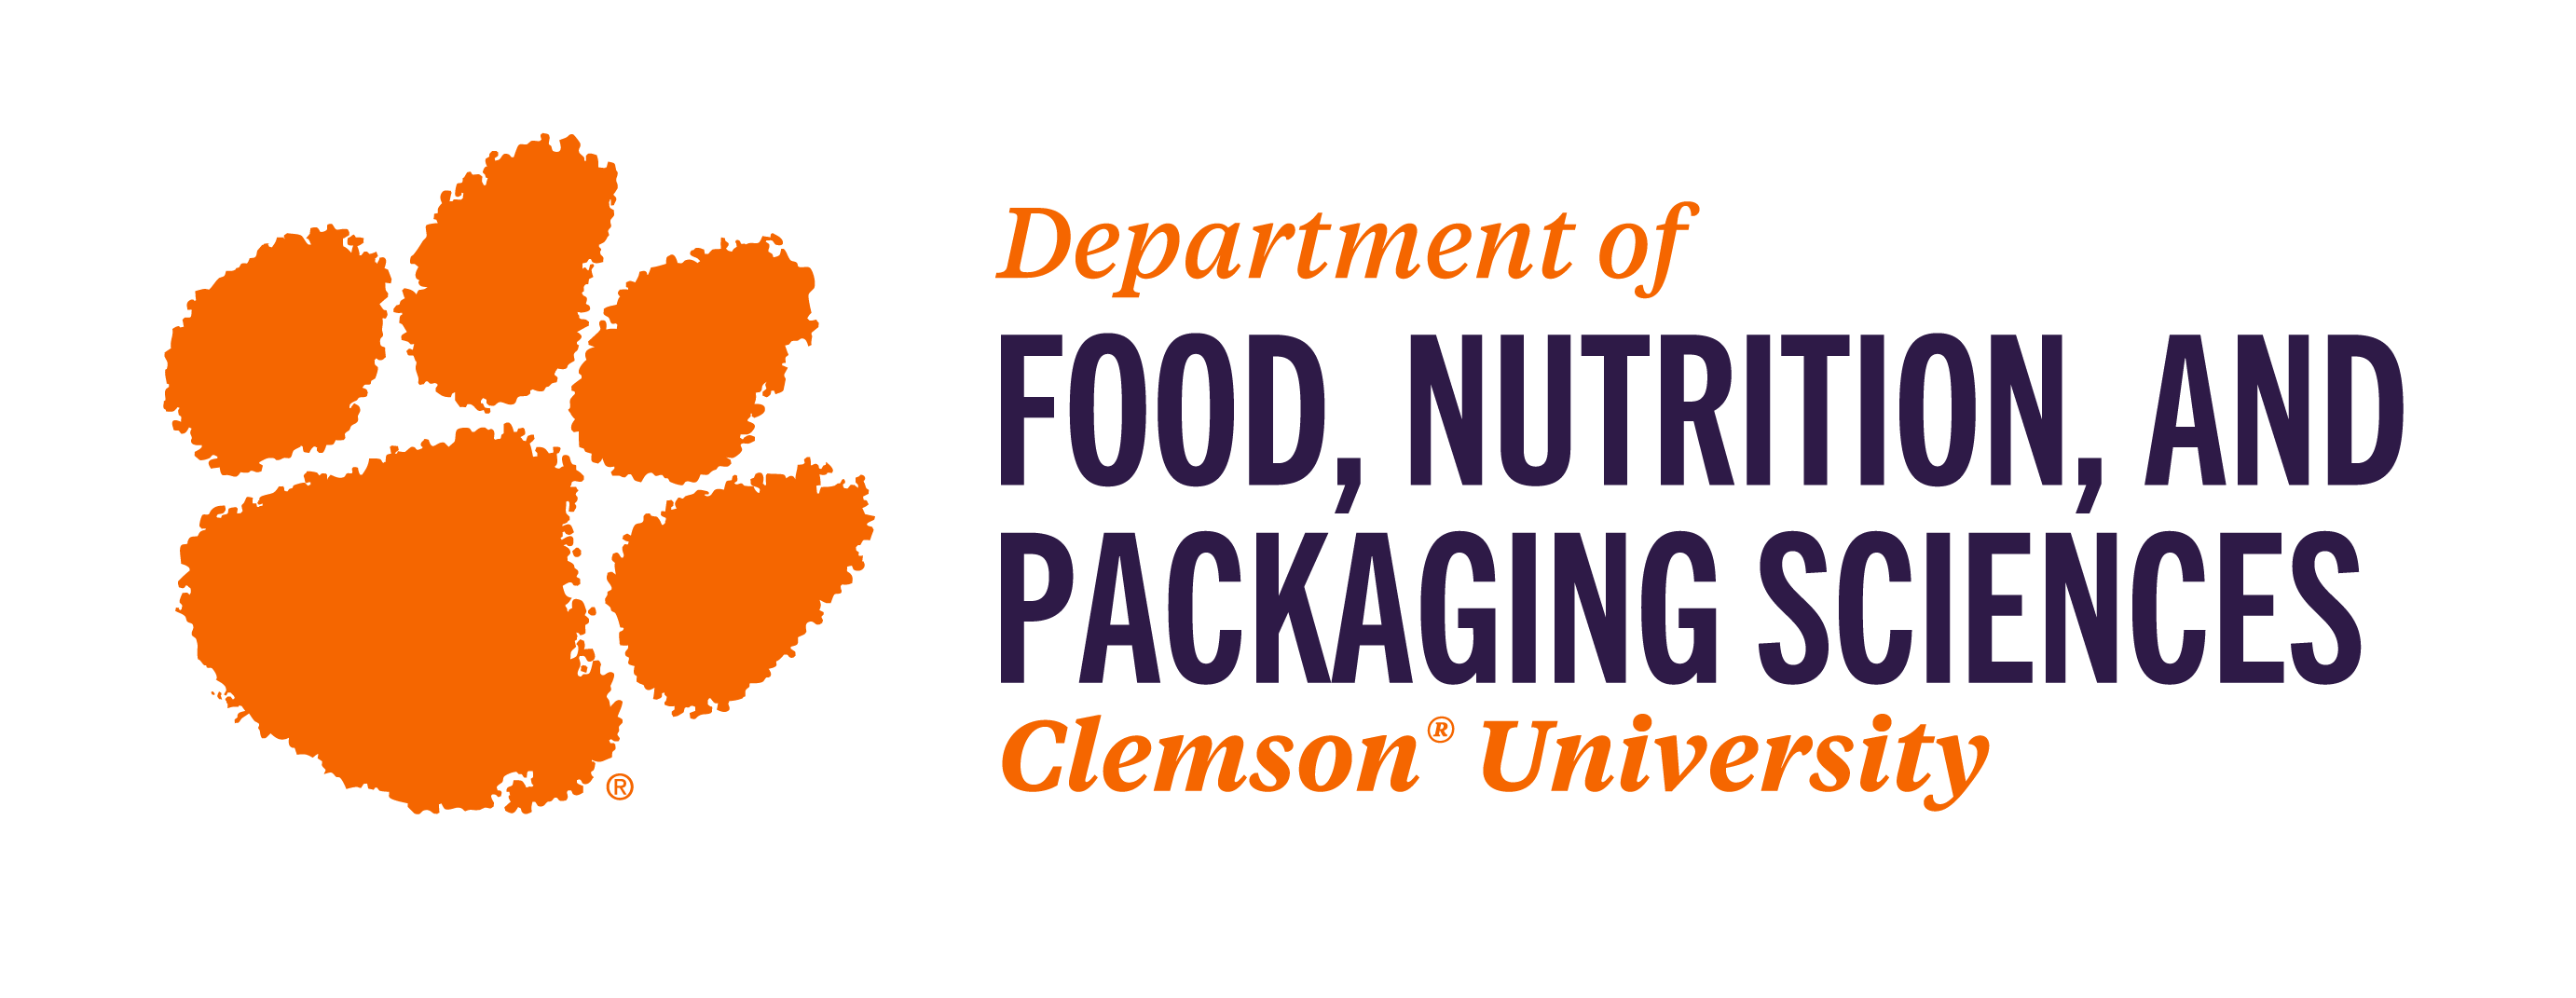 Food, Nutrition, Packaging Science logo